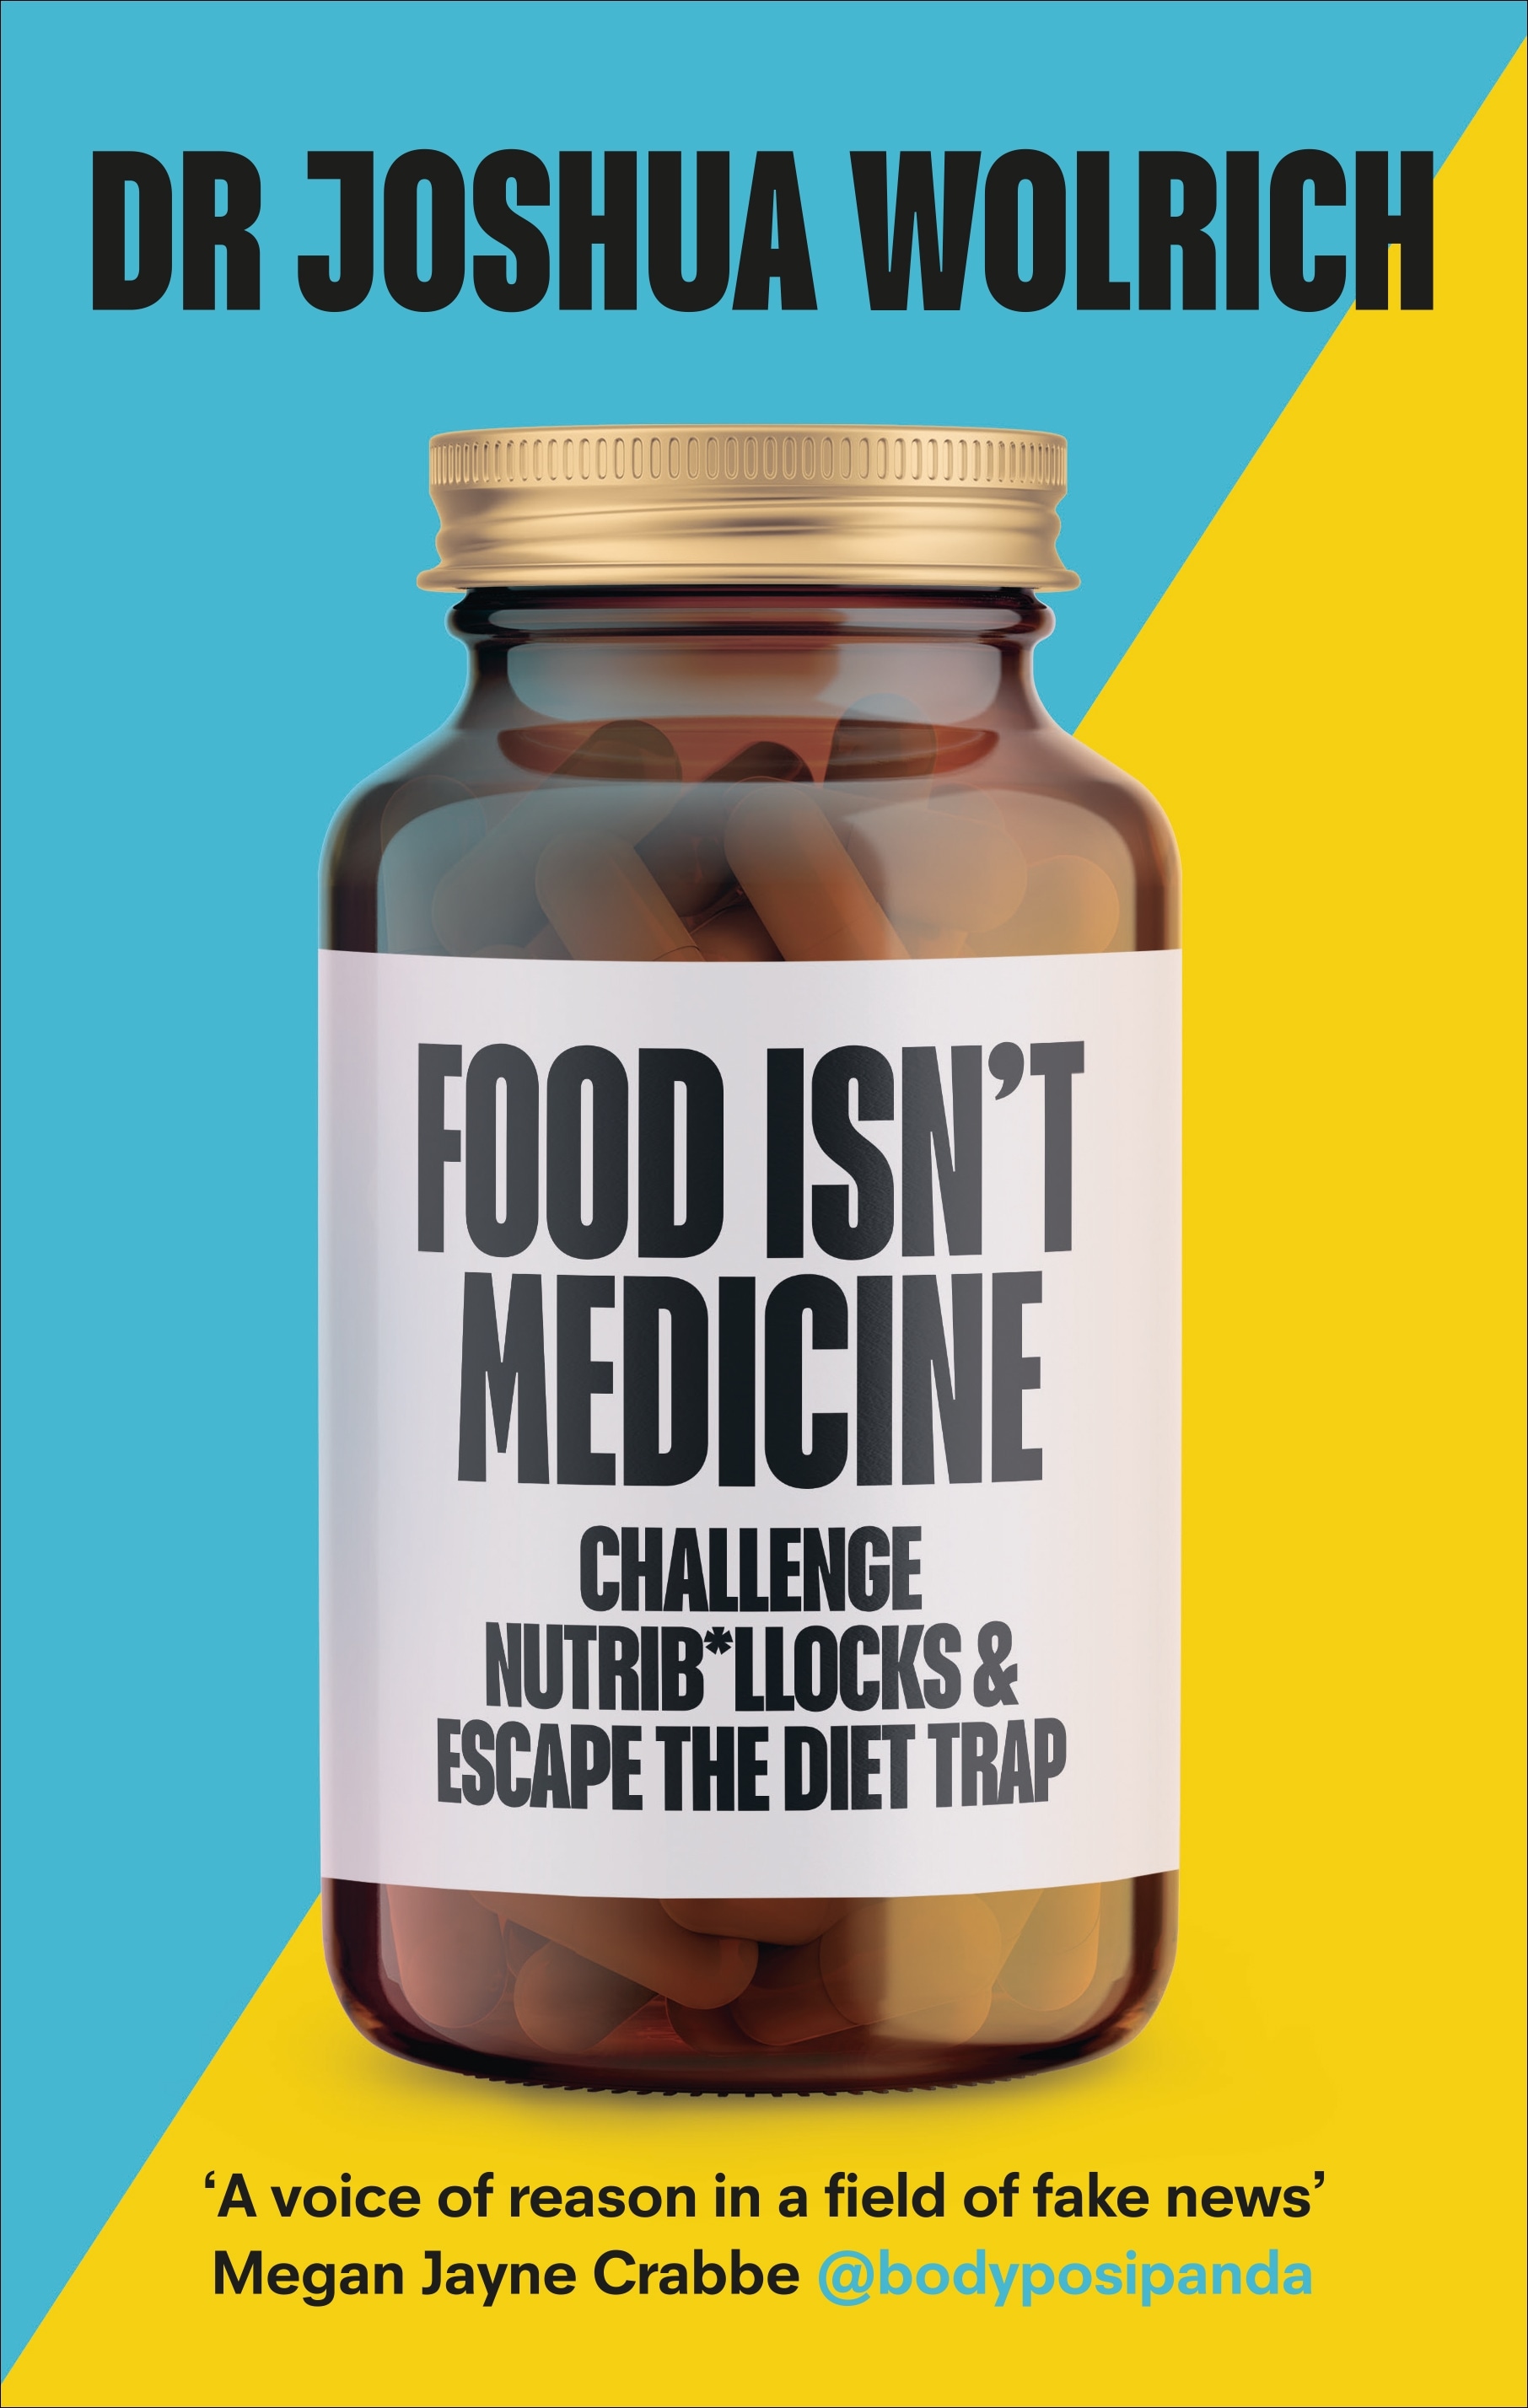 Book “Food Isn’t Medicine” by Joshua Wolrich — April 15, 2021